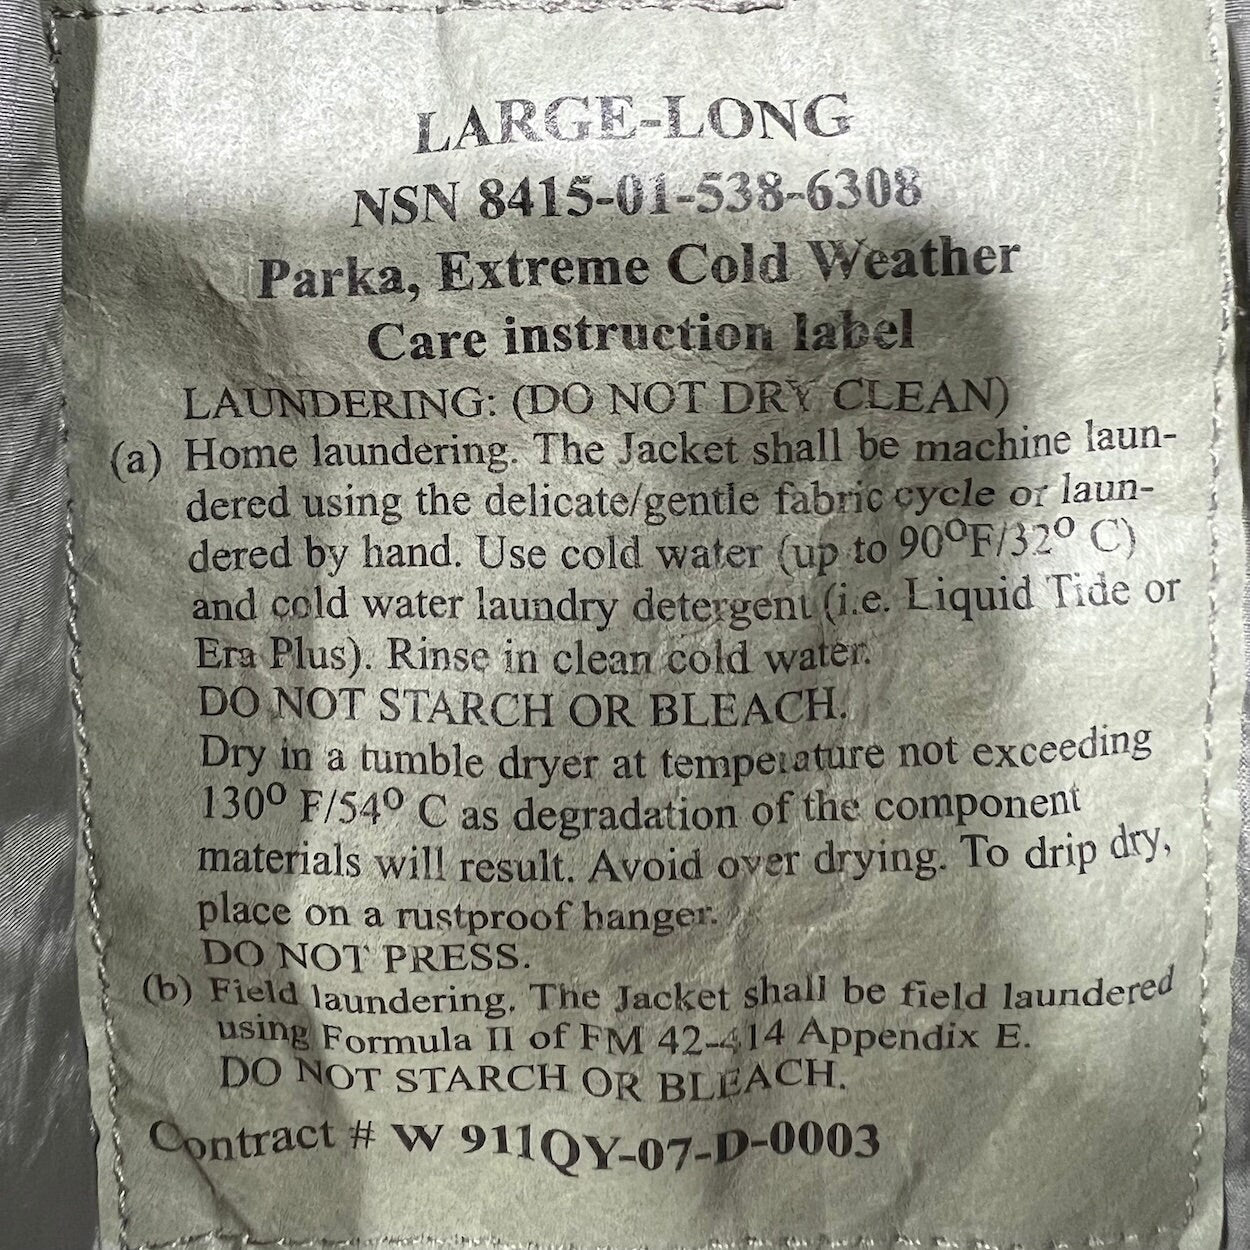 US Army Primaloft Gen III Extreme Cold Weather Parka Jacket  USG Level 7 Extreme Cold Weather Insulated Jacket